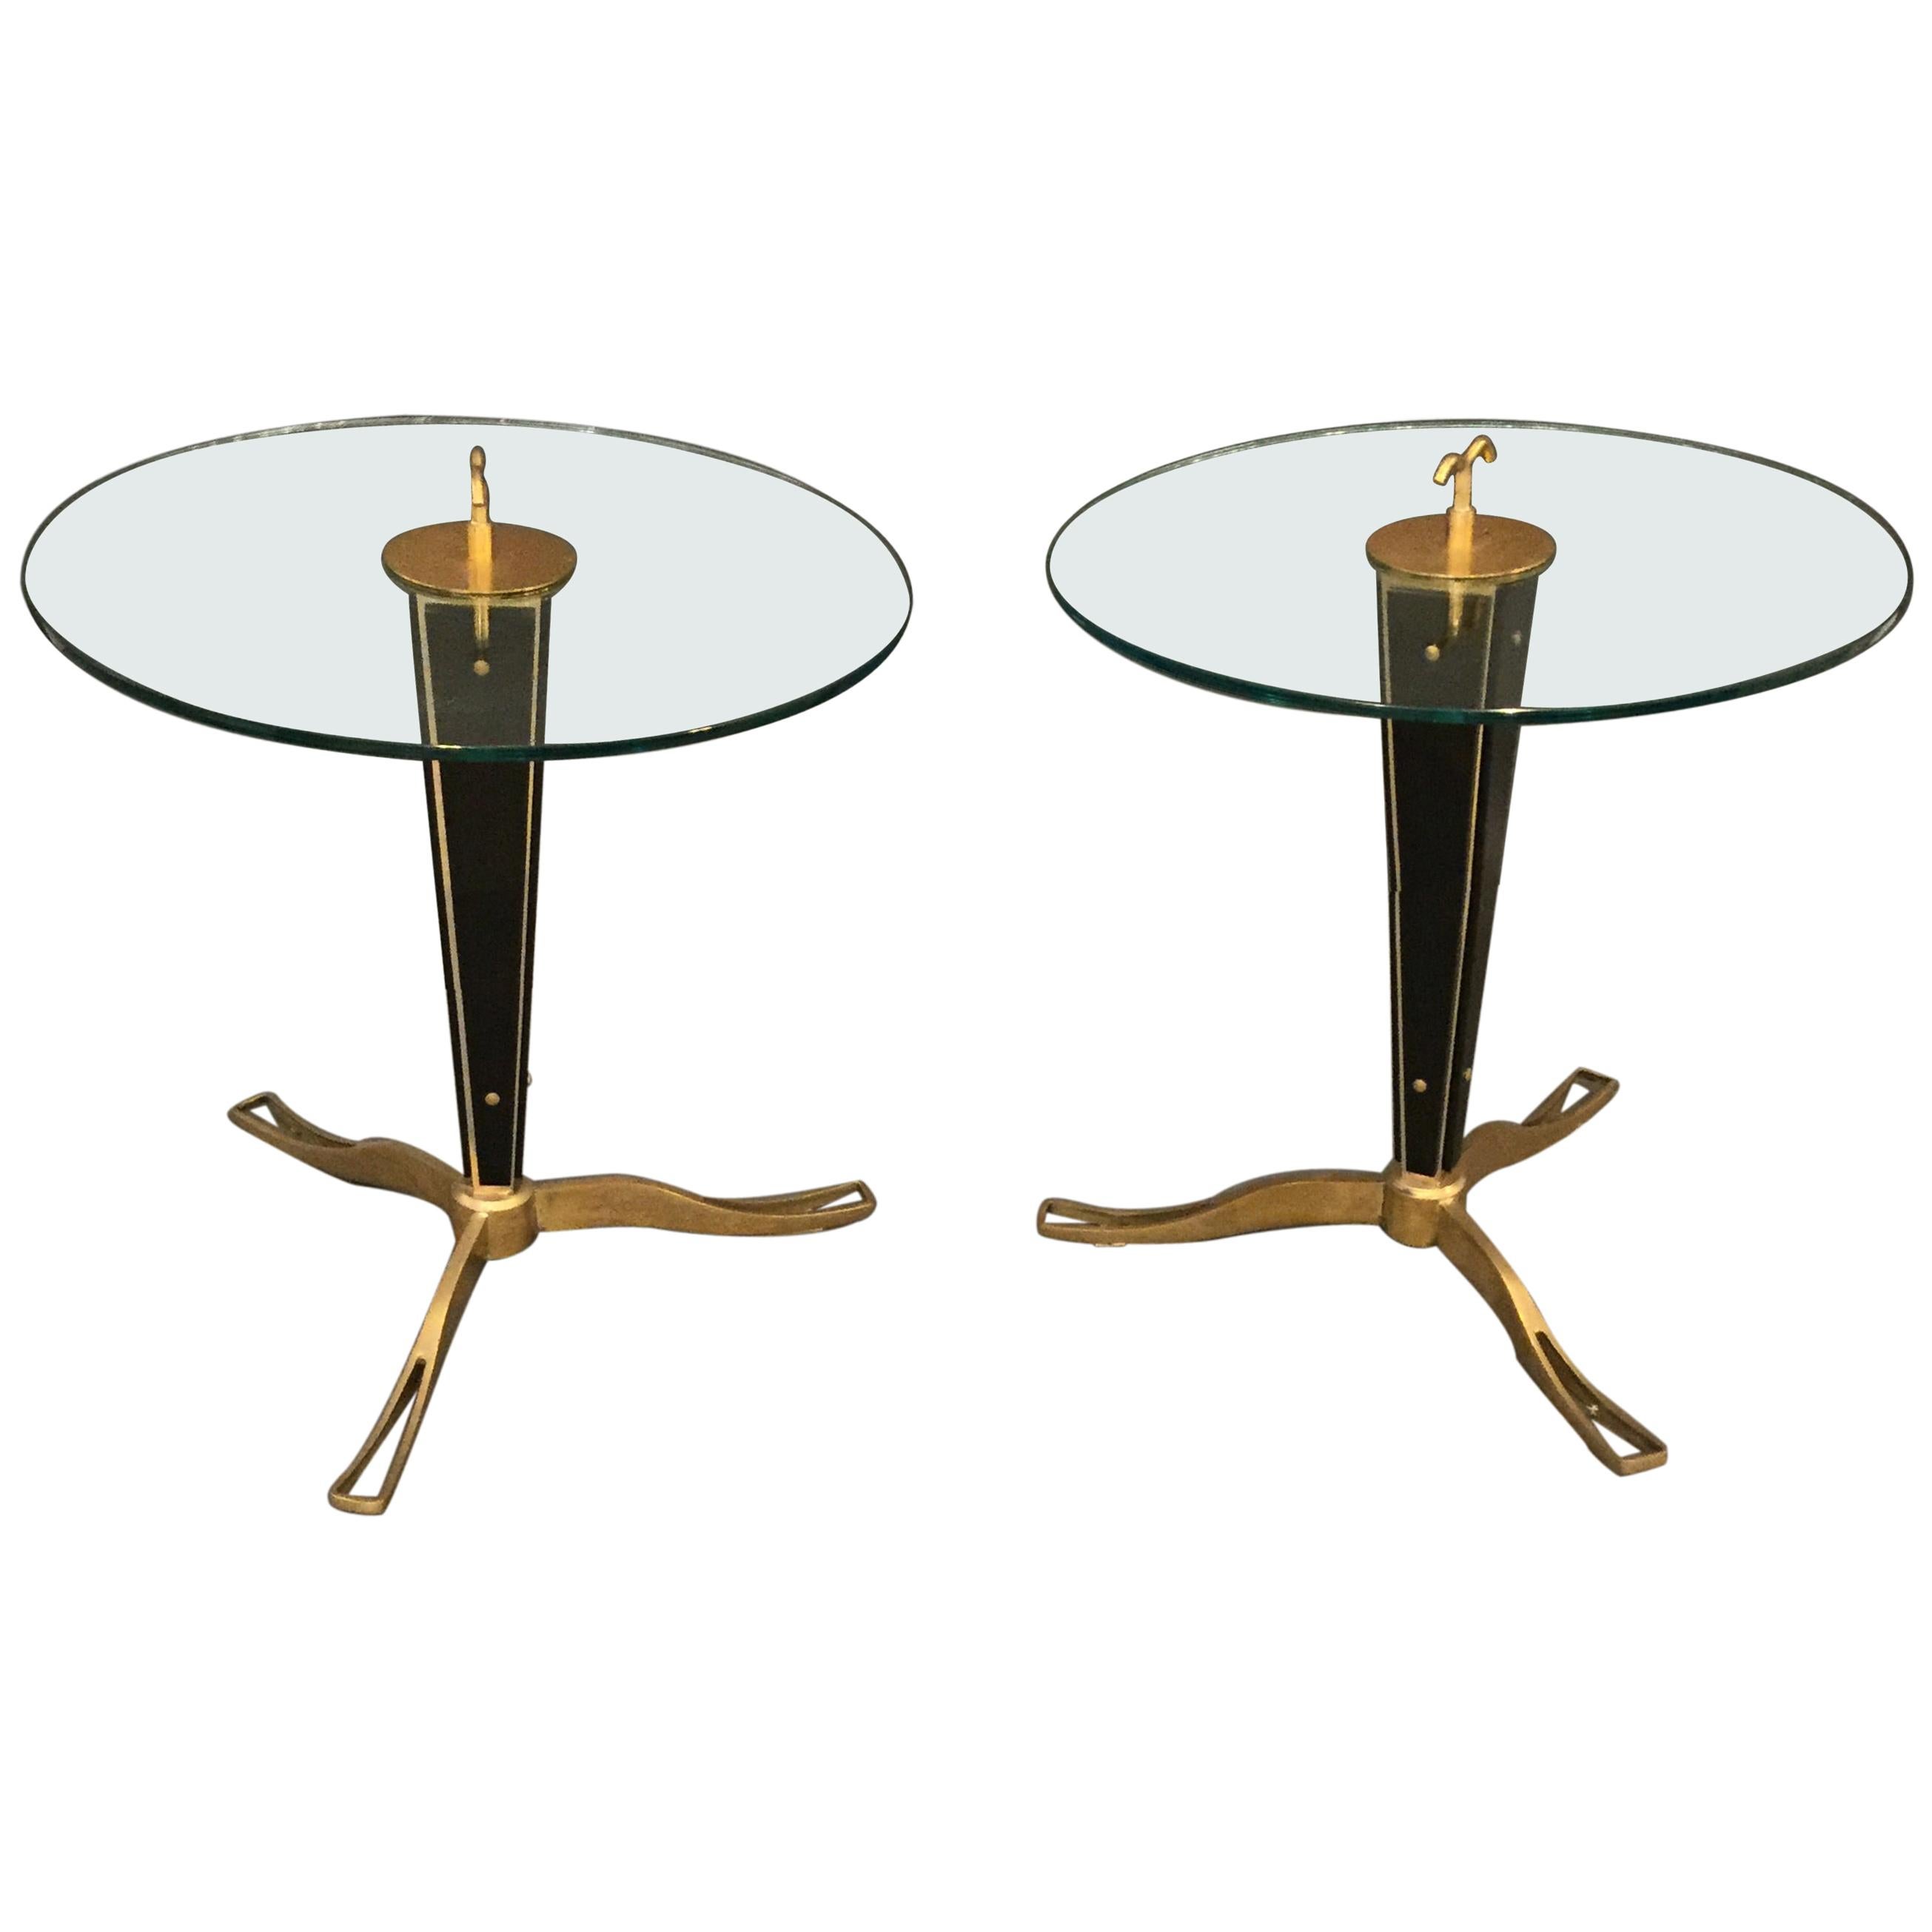 Pair of Circular Italian Designed Cocktail Tables on Bronze Tripod Legs